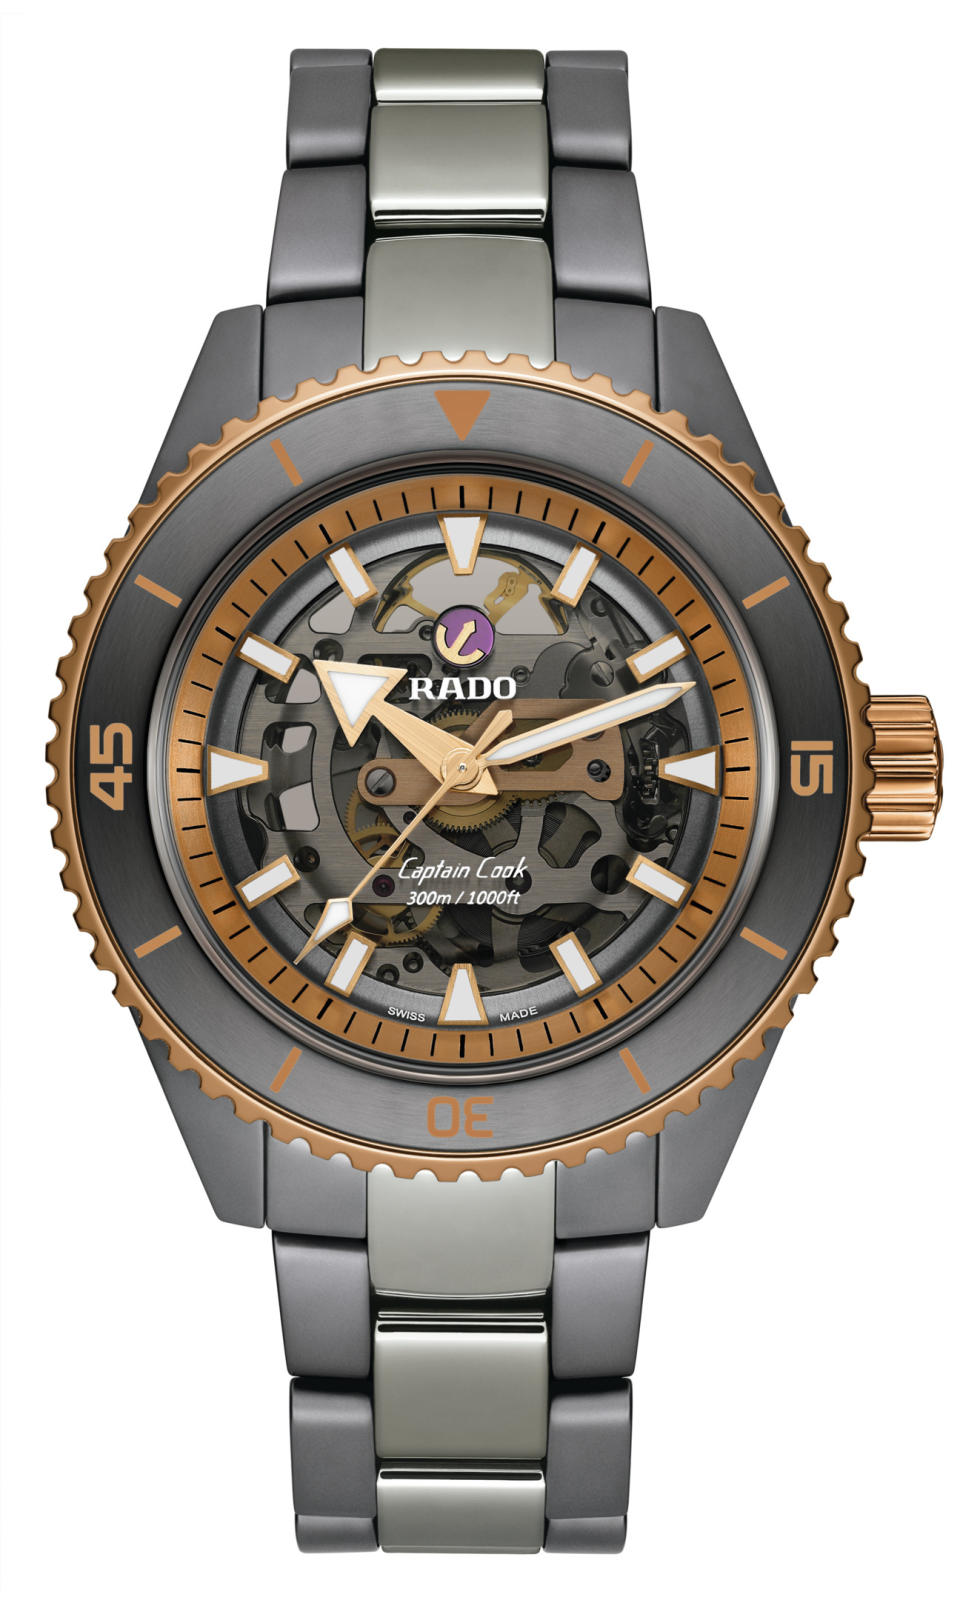 Rado’s Captain Cook High Tech Ceramic Skeleton watch